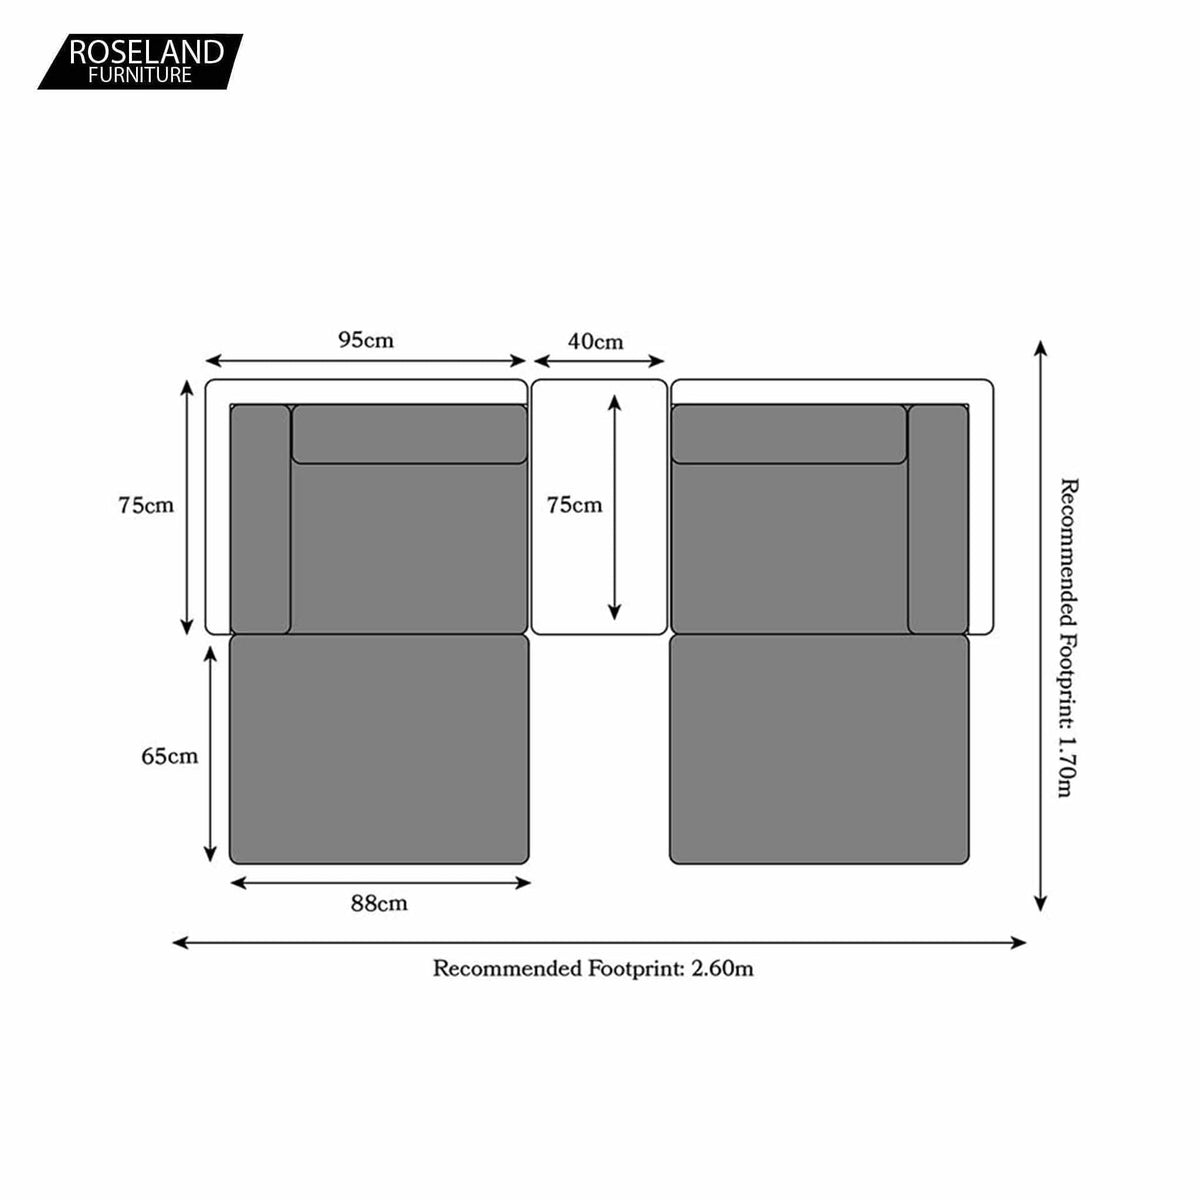 Wentworth Multi Positional Garden Relaxer Sun Lounger Set Dimensions & Size Guide Arrangement 2